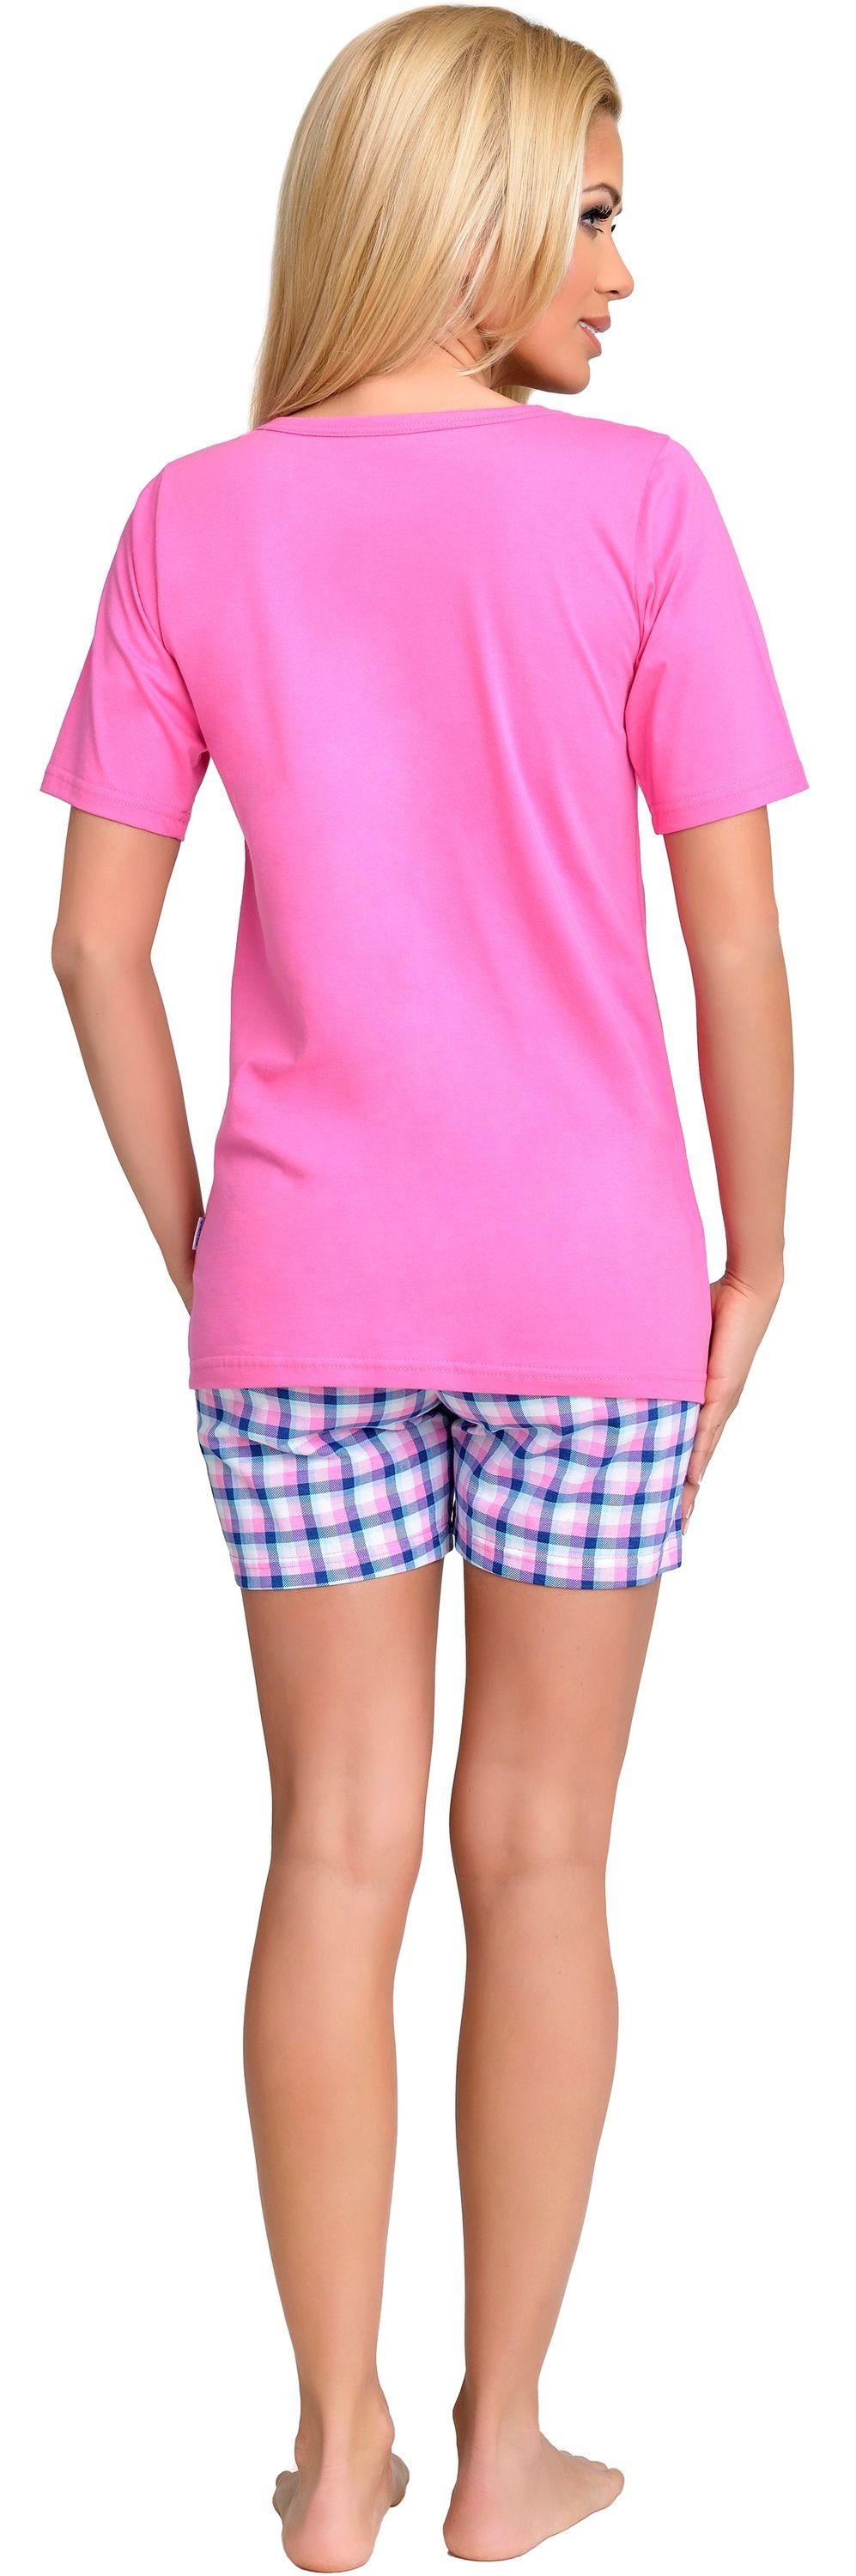 Stillpyjama Damen Be J5ST3N2 Umstandspyjama Schlafanzug Mammy Rosa-1